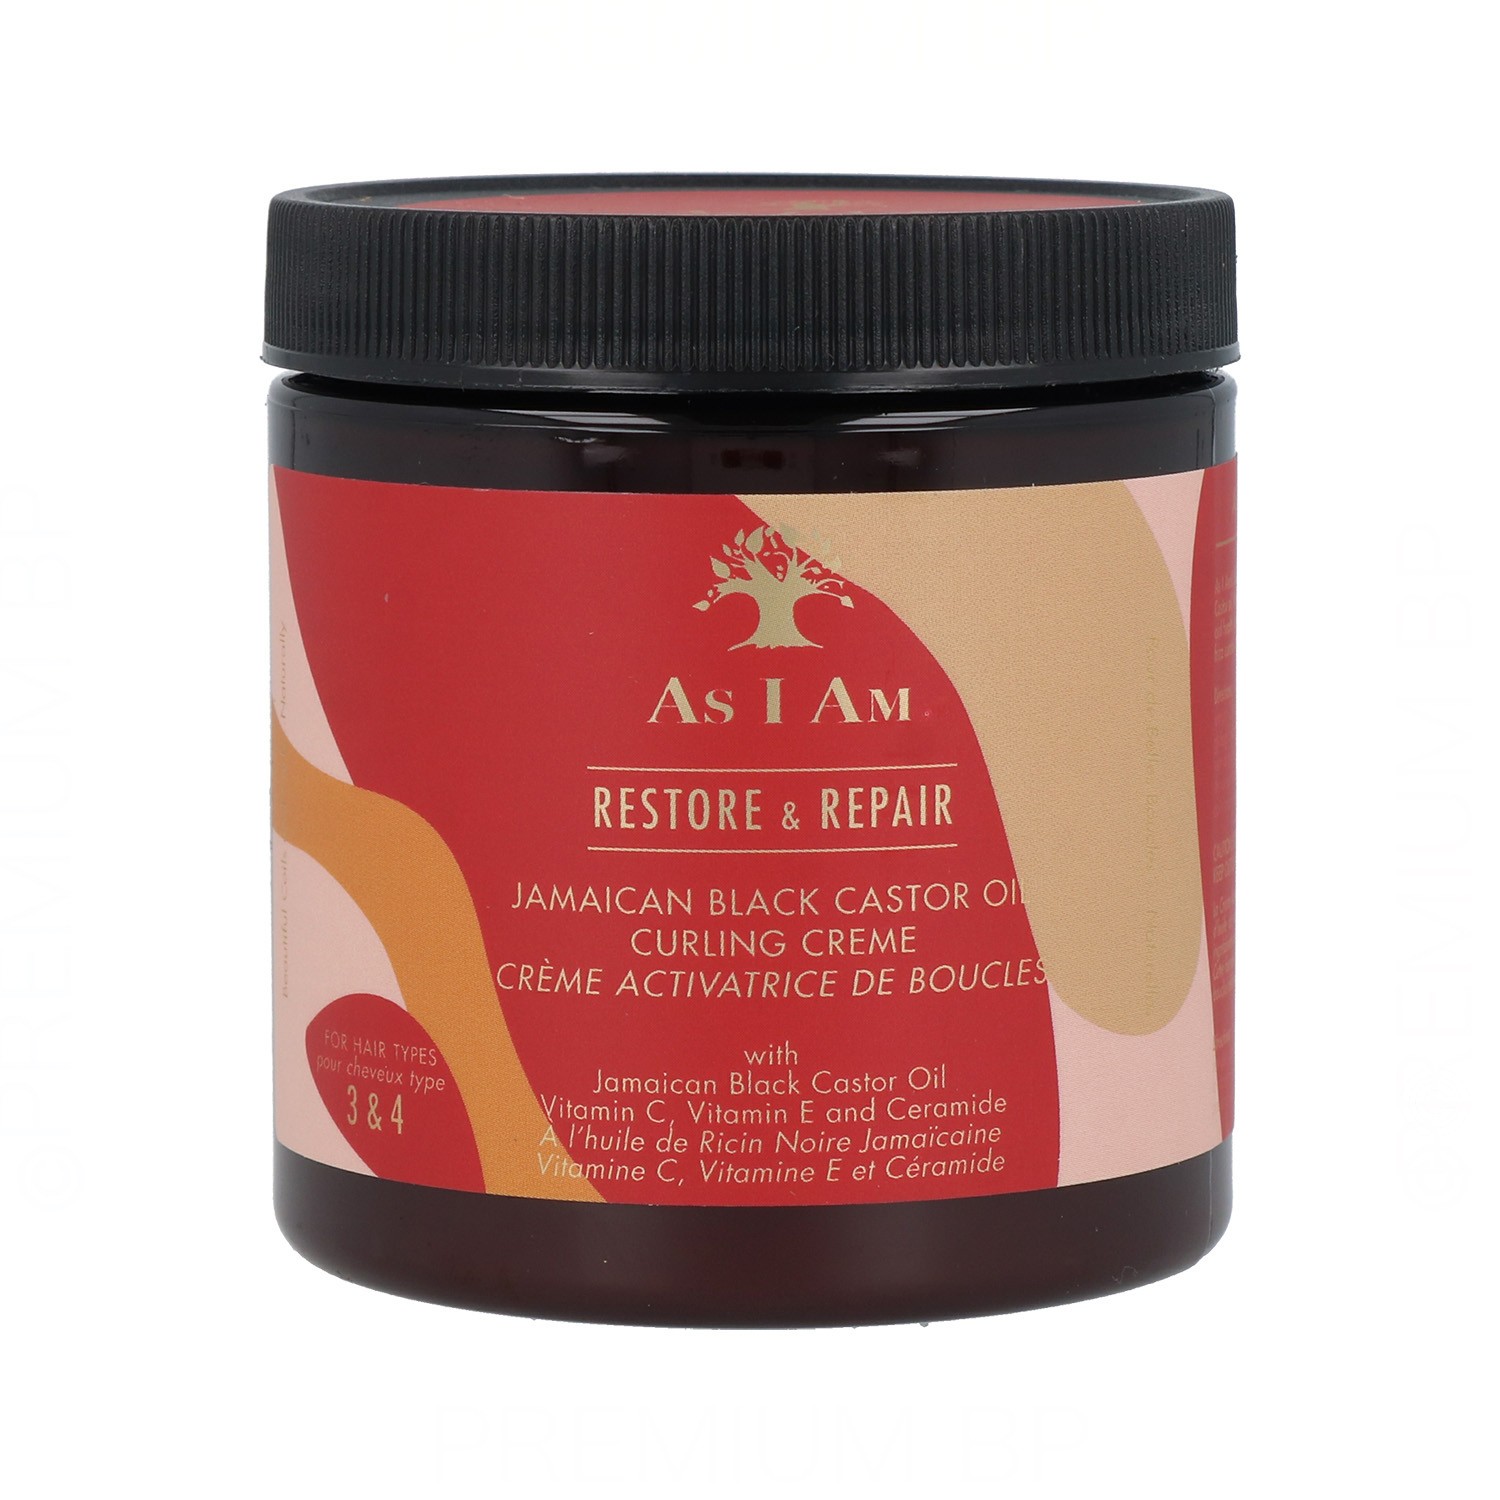 As I Am - As i am jamaican black castor oil curling crema 227g/8oz, producto vegano. ideal para cabellos tipo 3 (rizado) y tipo 4 (muy rizado/afro).